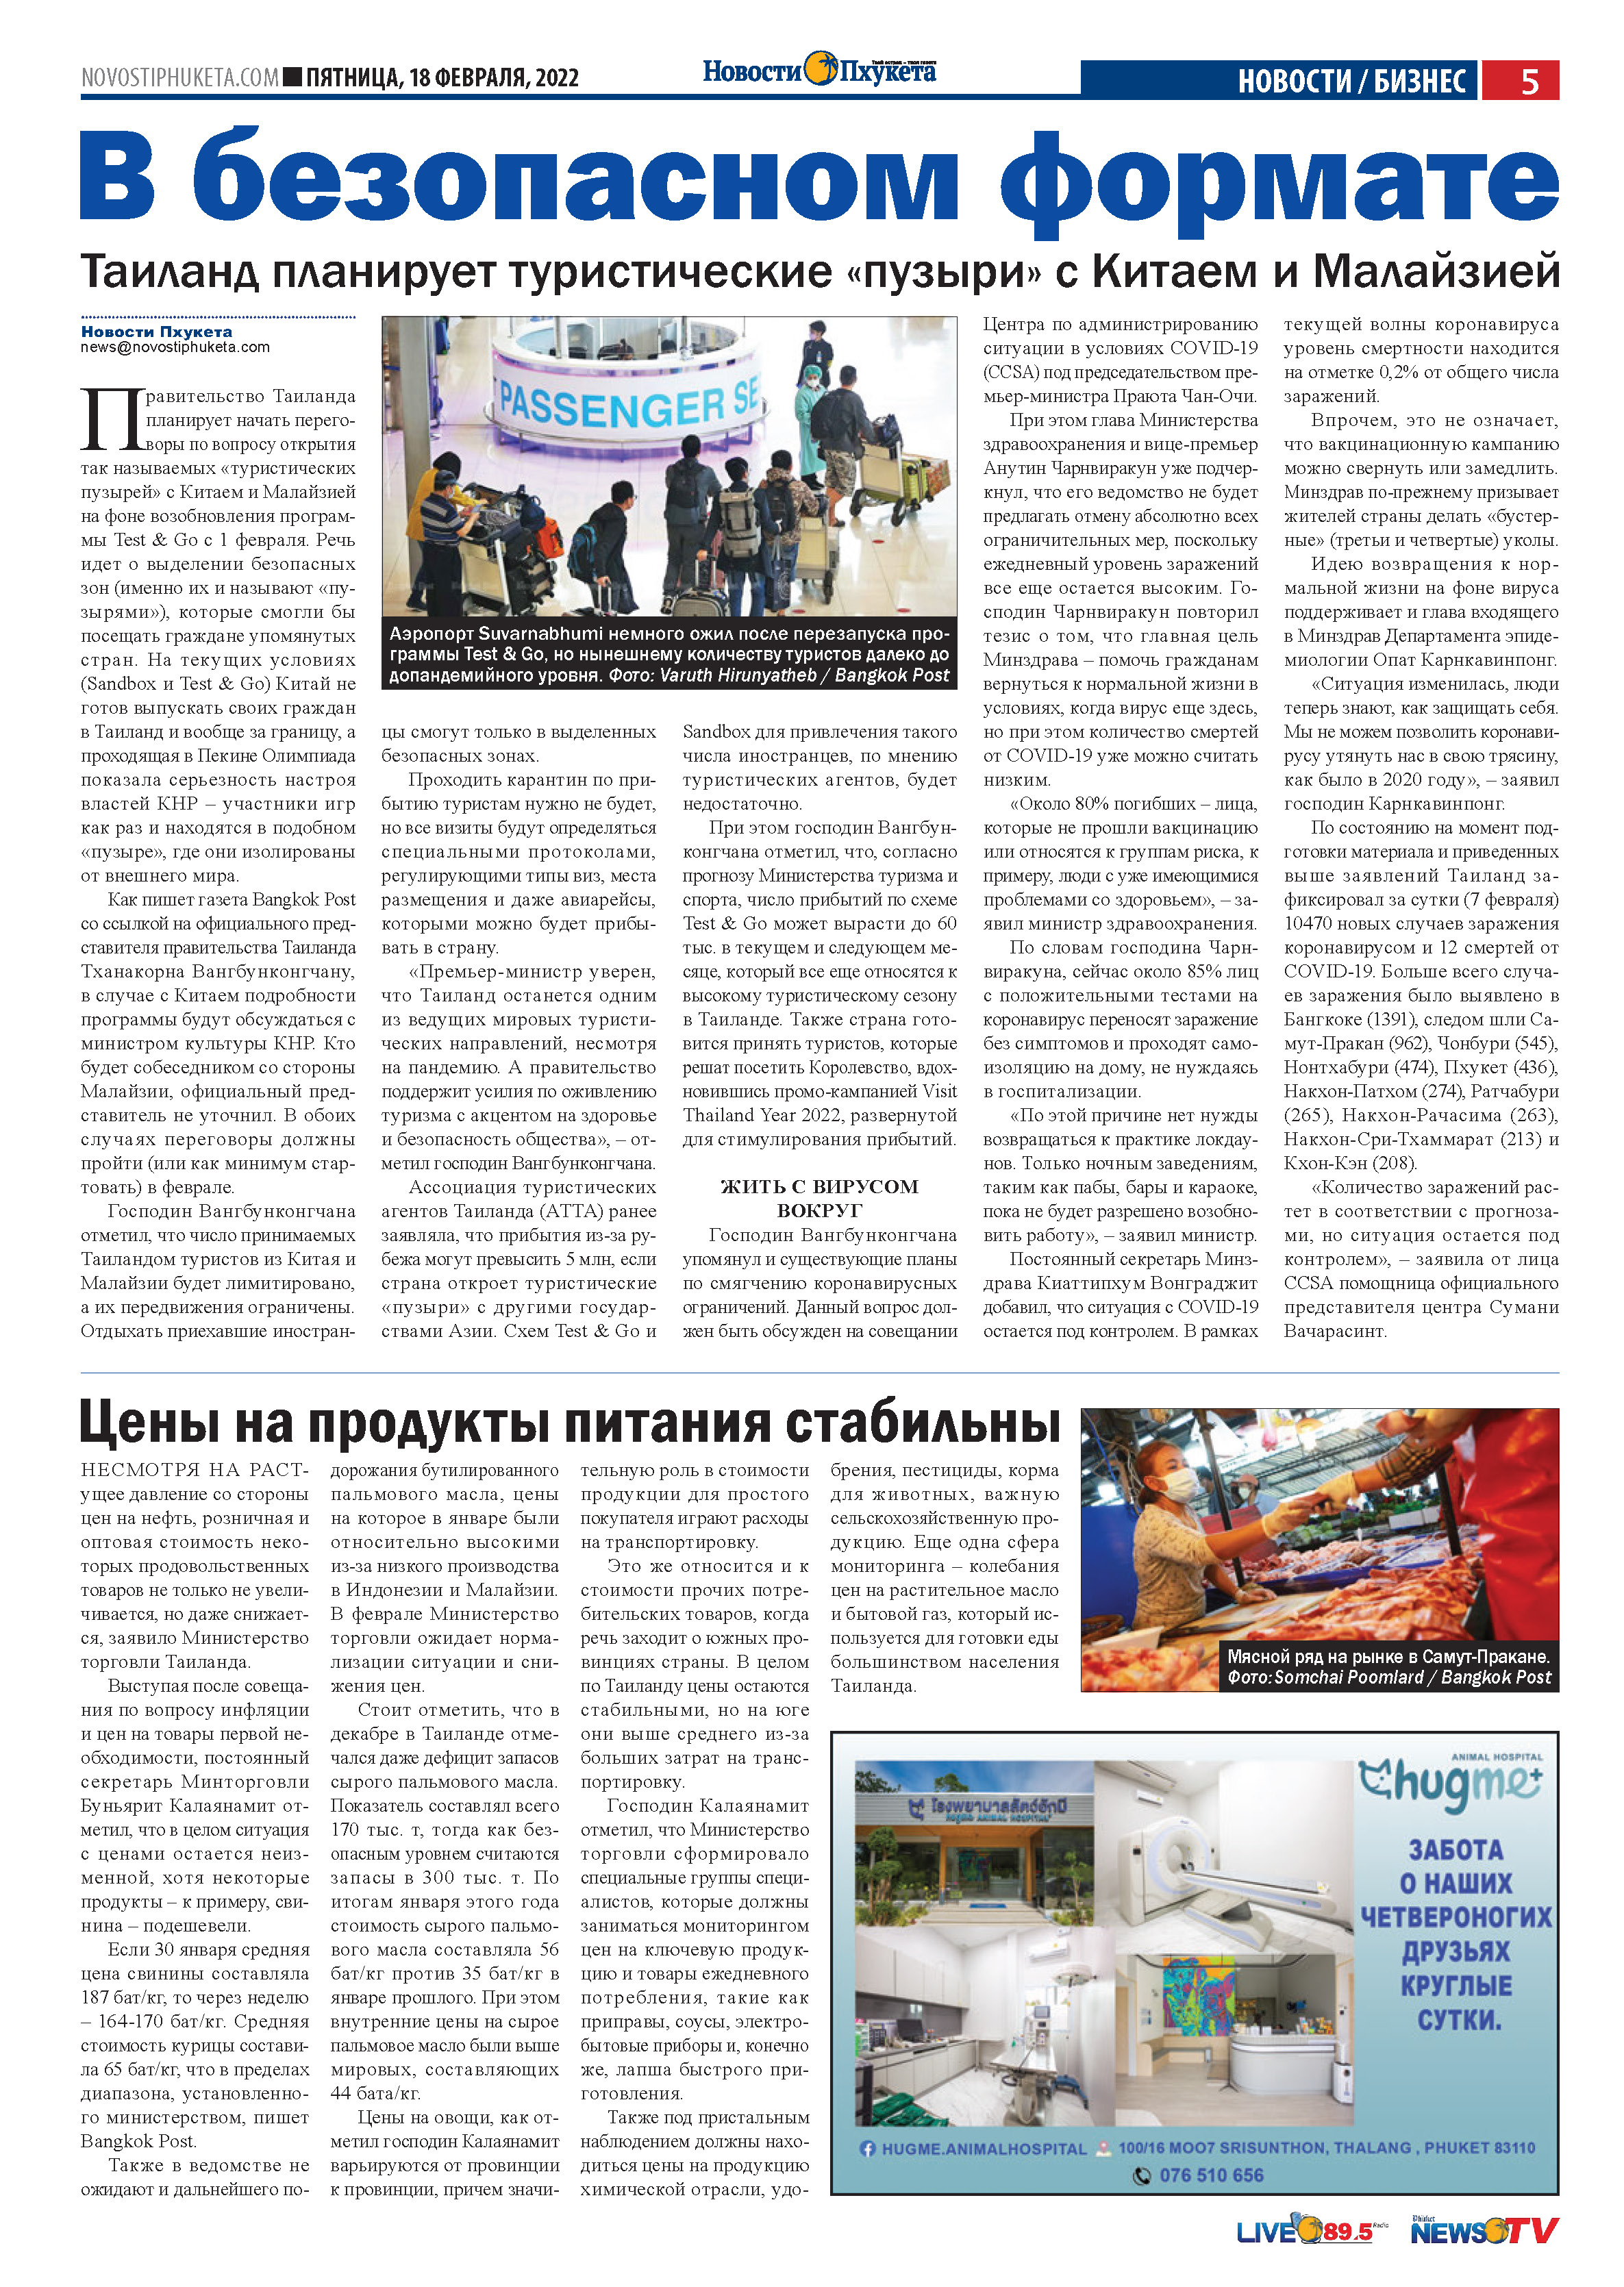 Phuket Newspaper - https://www.novostiphuketa.com/archive/18-02-2022/18-02-2022_Page_05.jpg